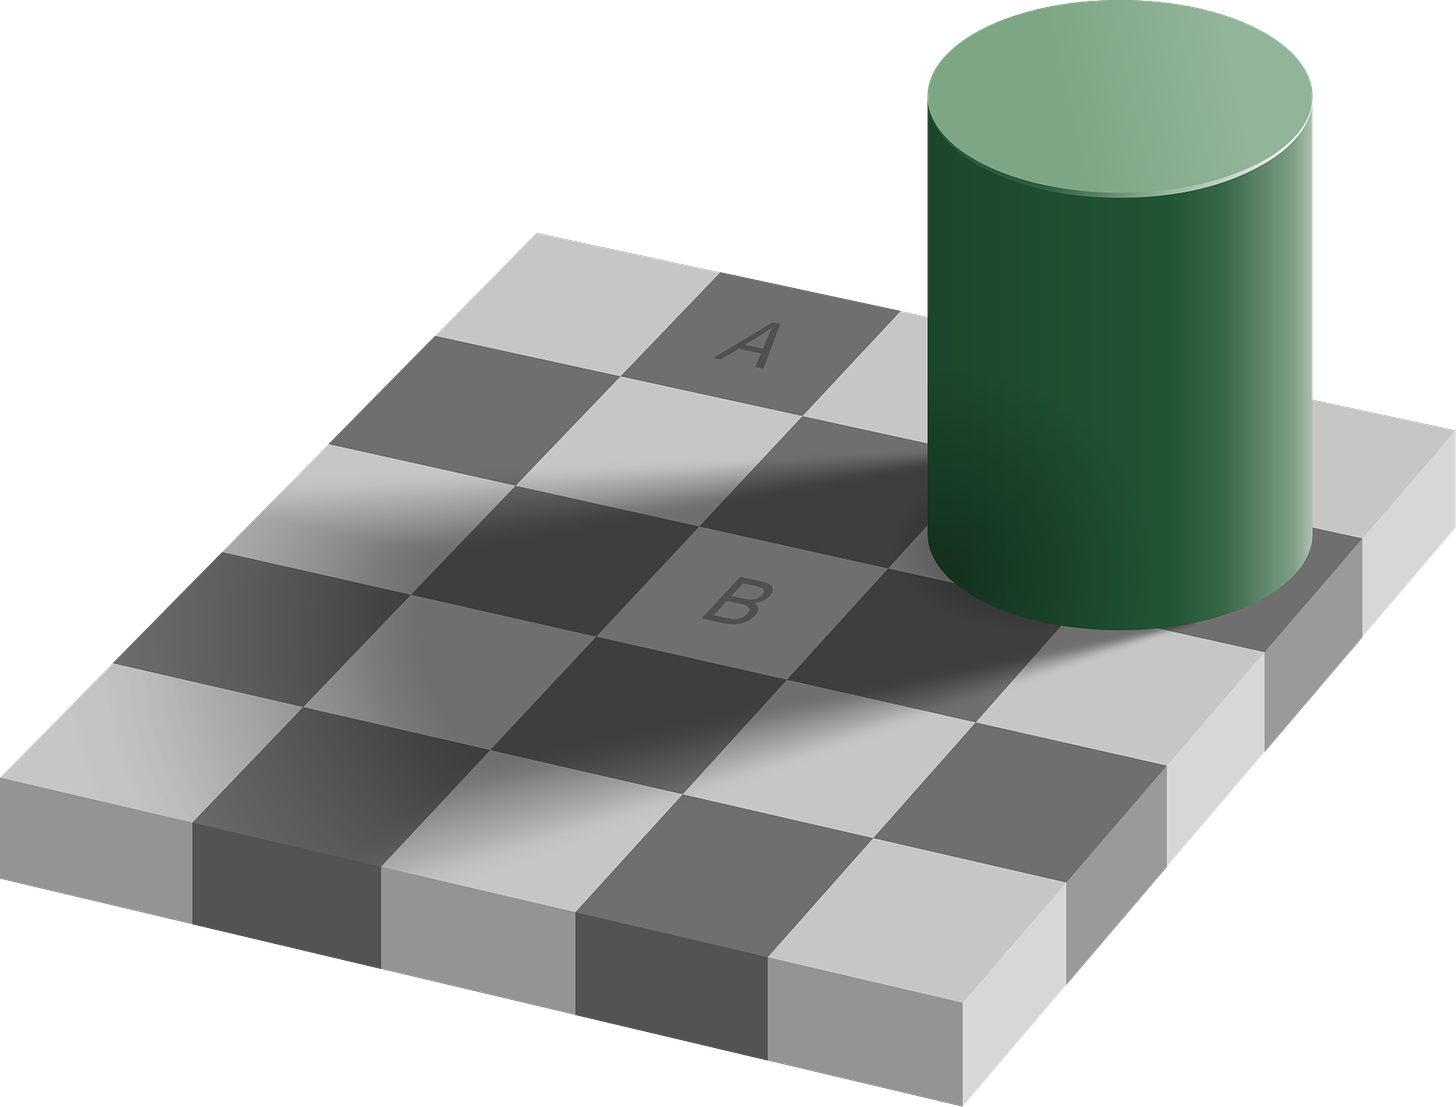 The checker shadow illusion